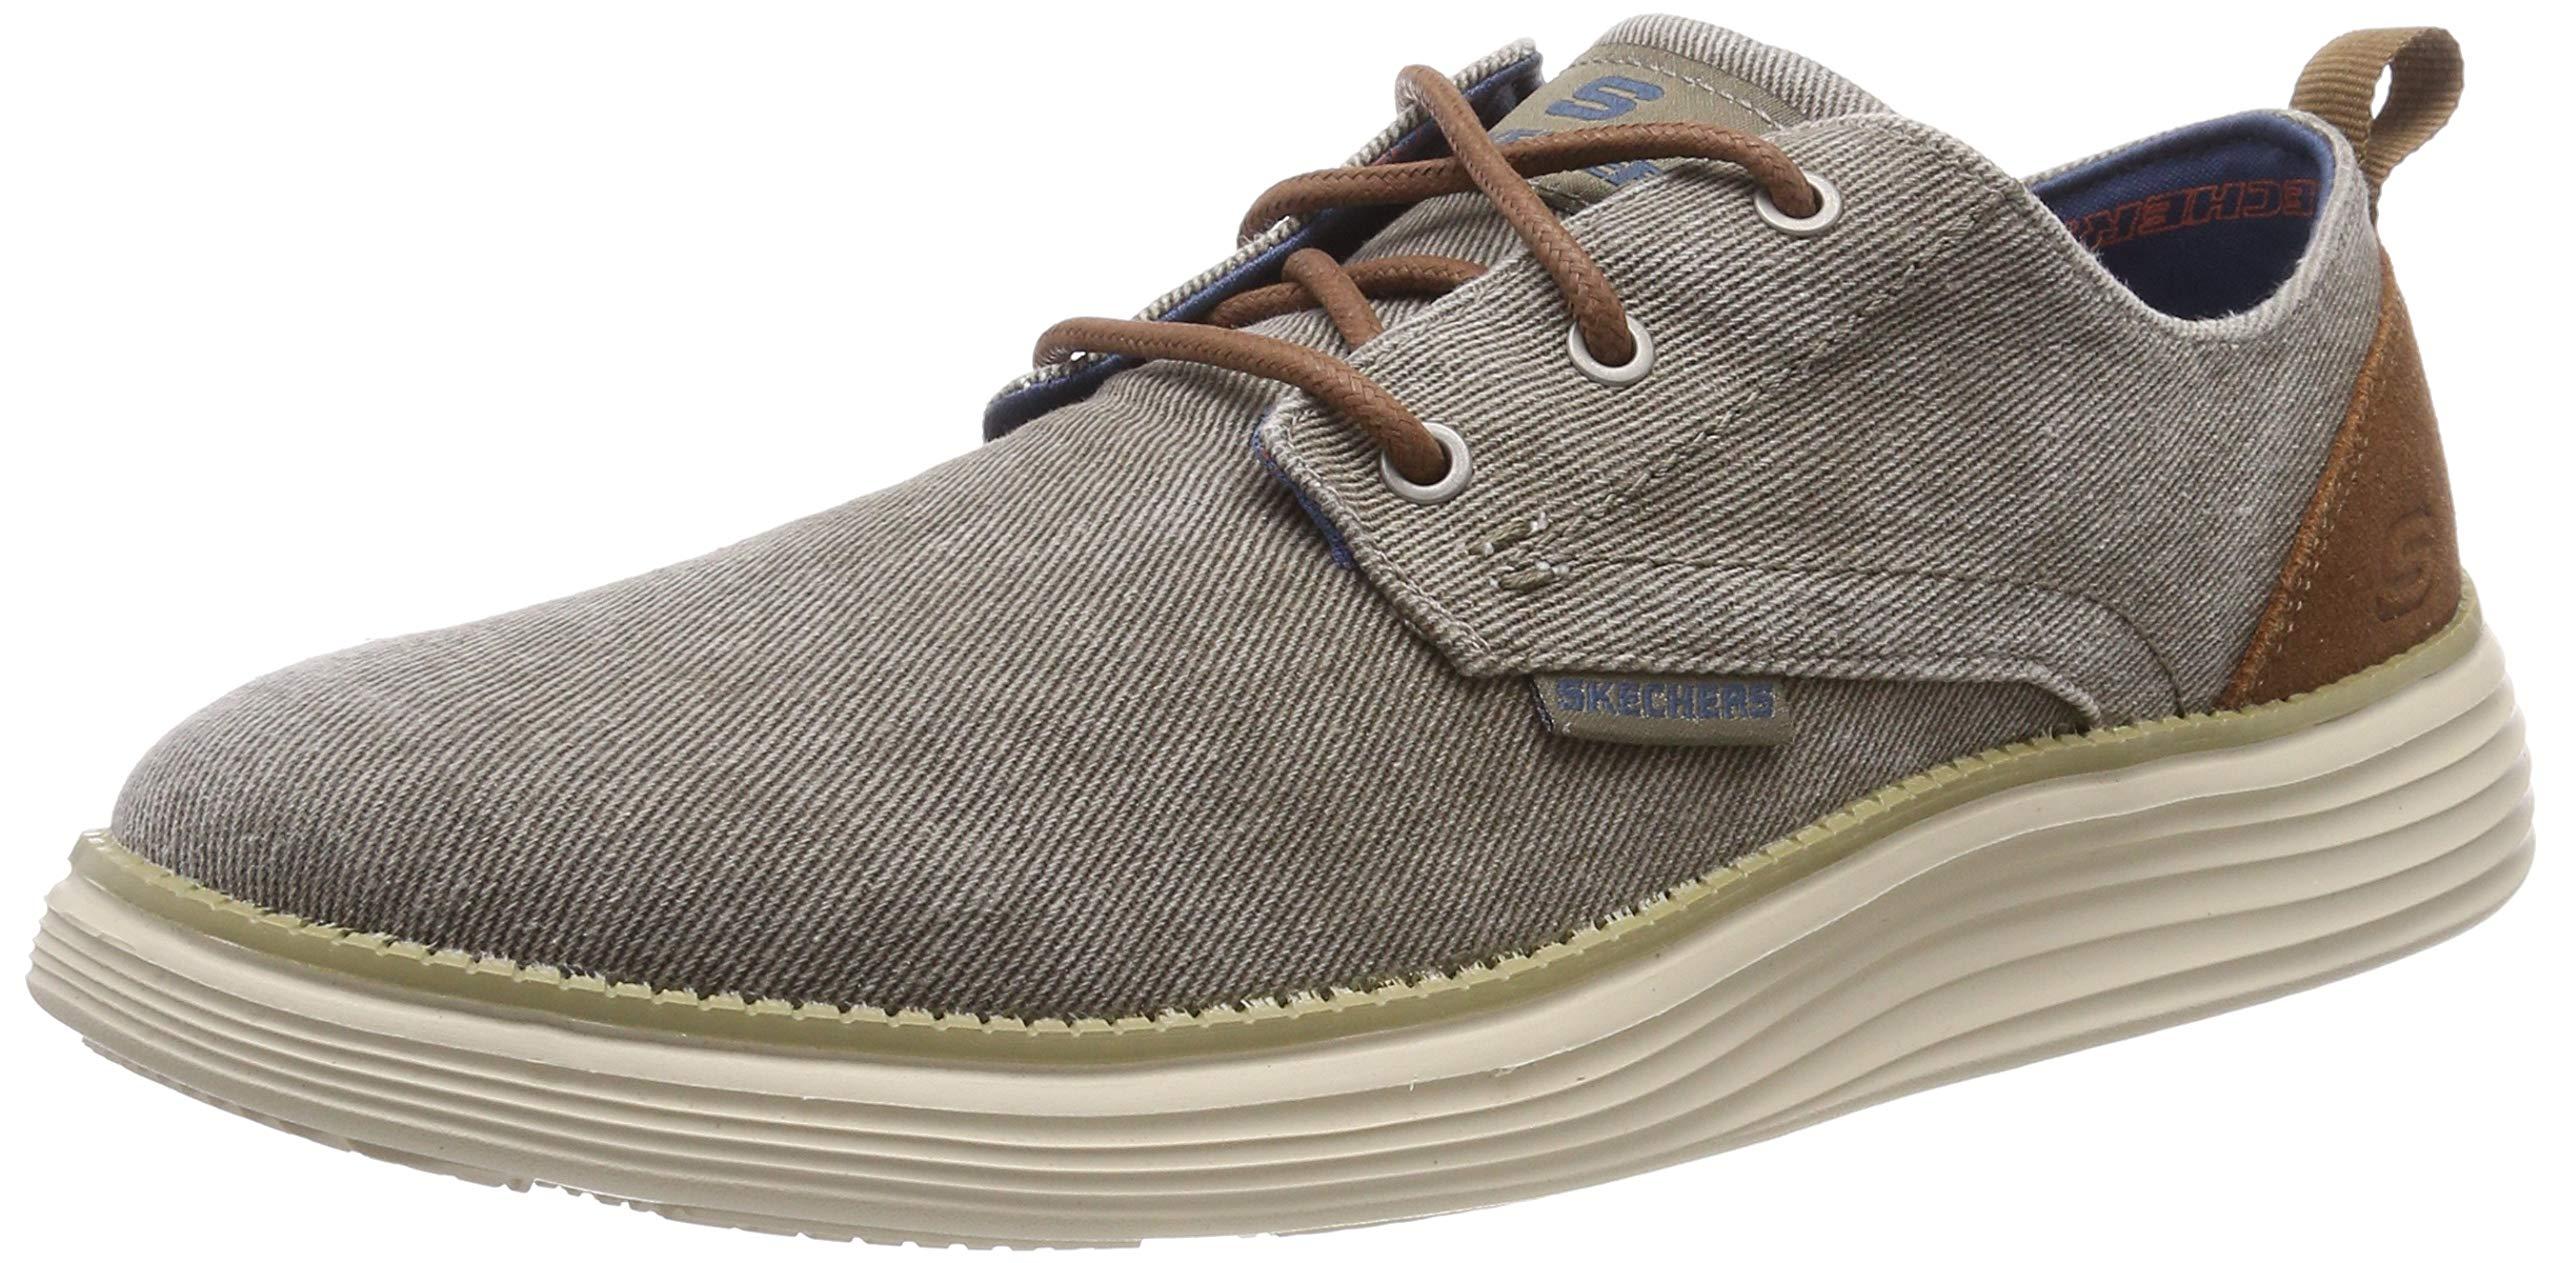 Skechers Status 2.0 Pexton Boat Shoes in Gray for Men - Lyst